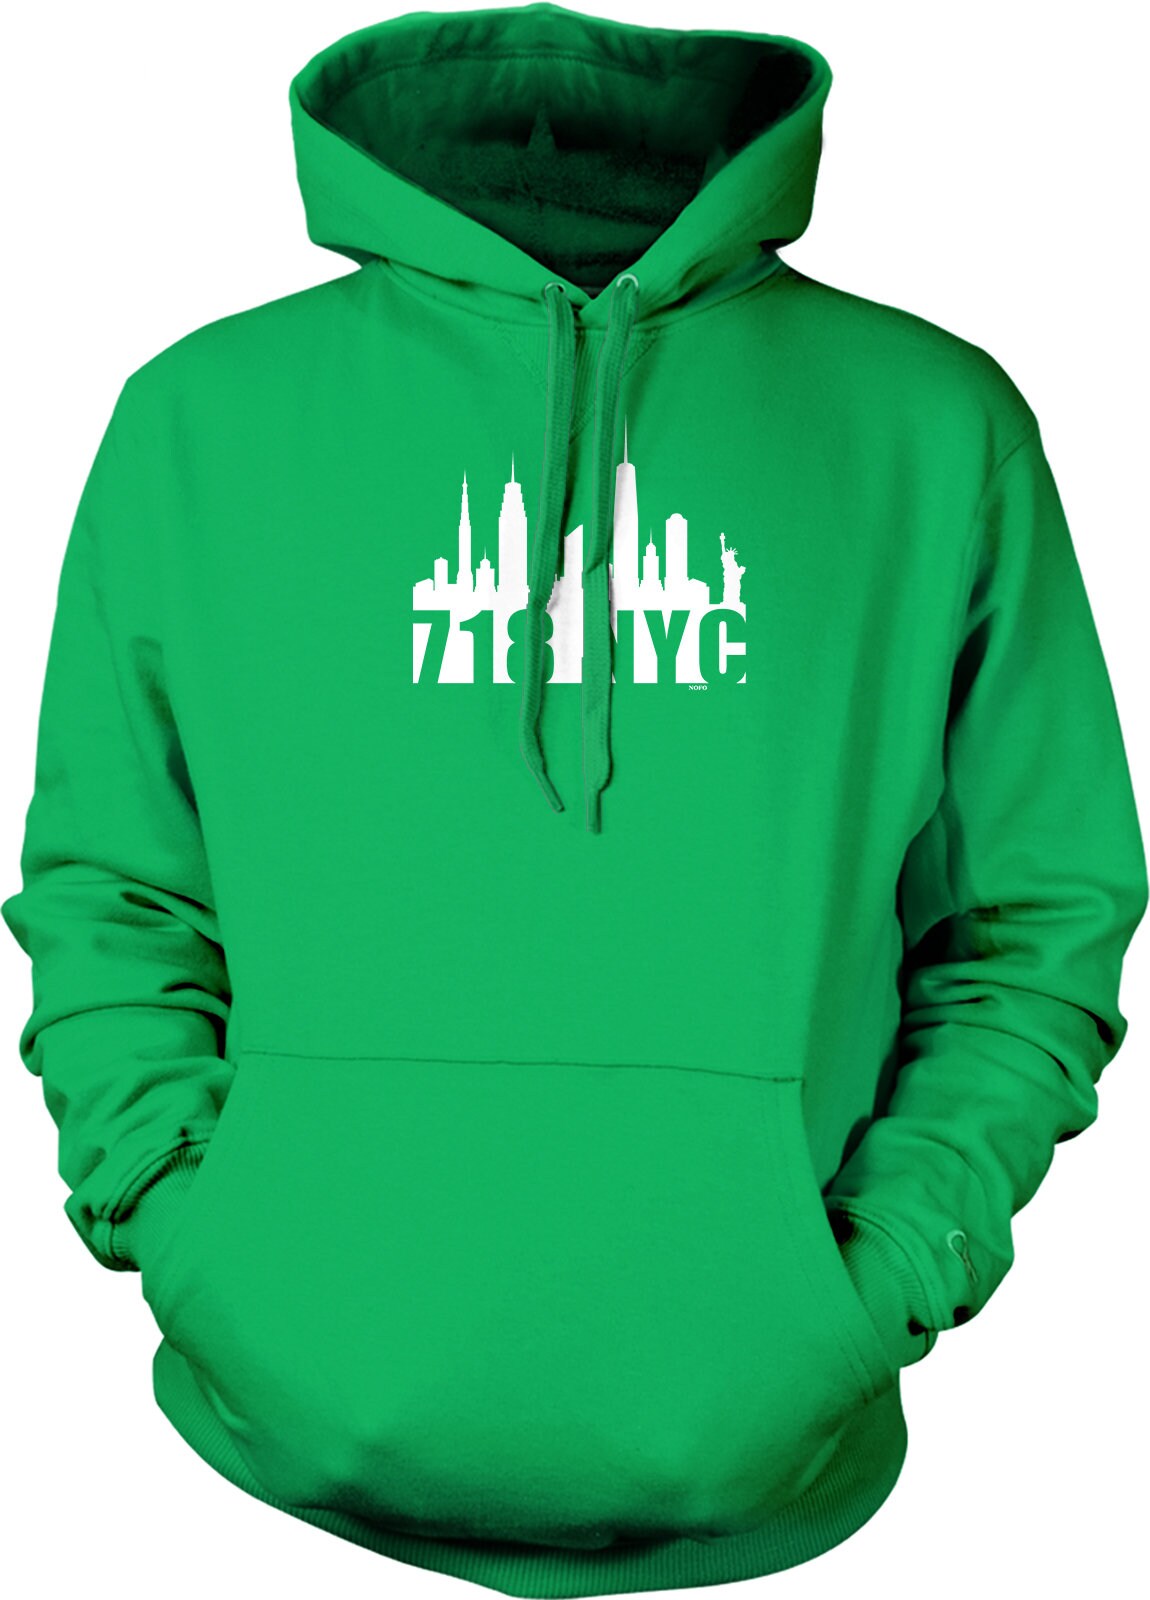 718 NYC Skyline Hooded Sweatshirt NOFO_01833 - Etsy